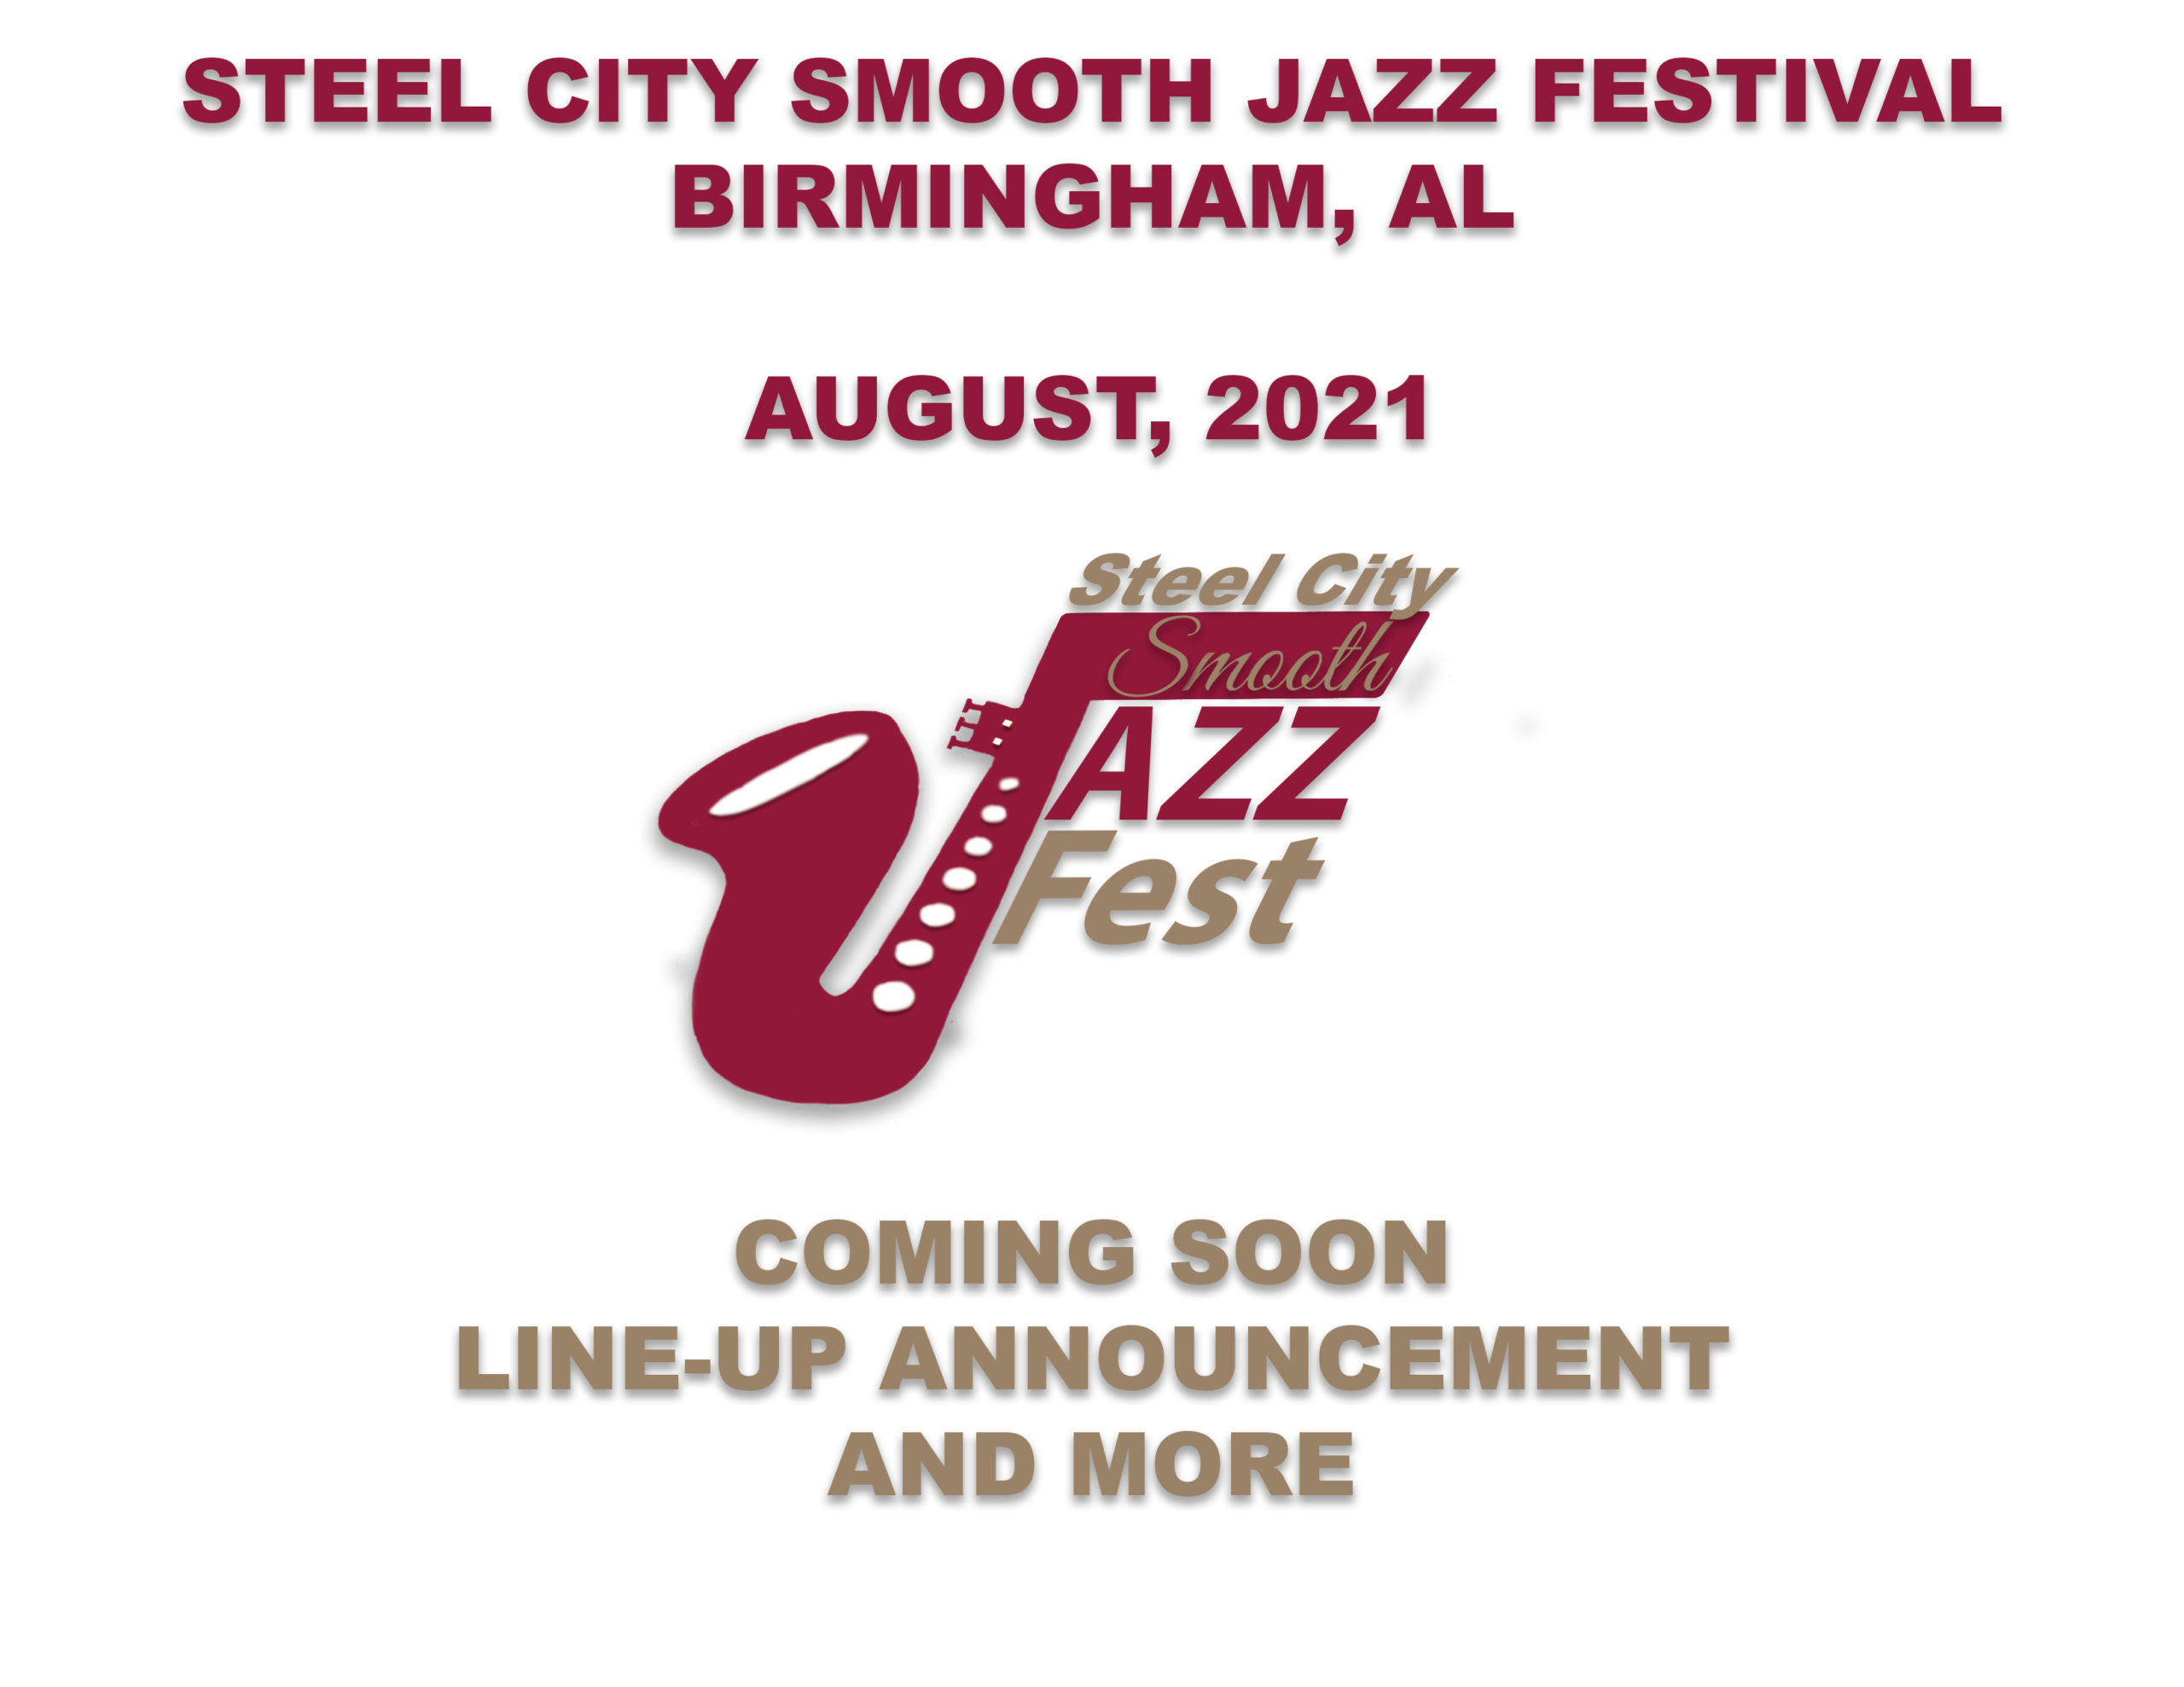 atlantic city jazz festival 2021